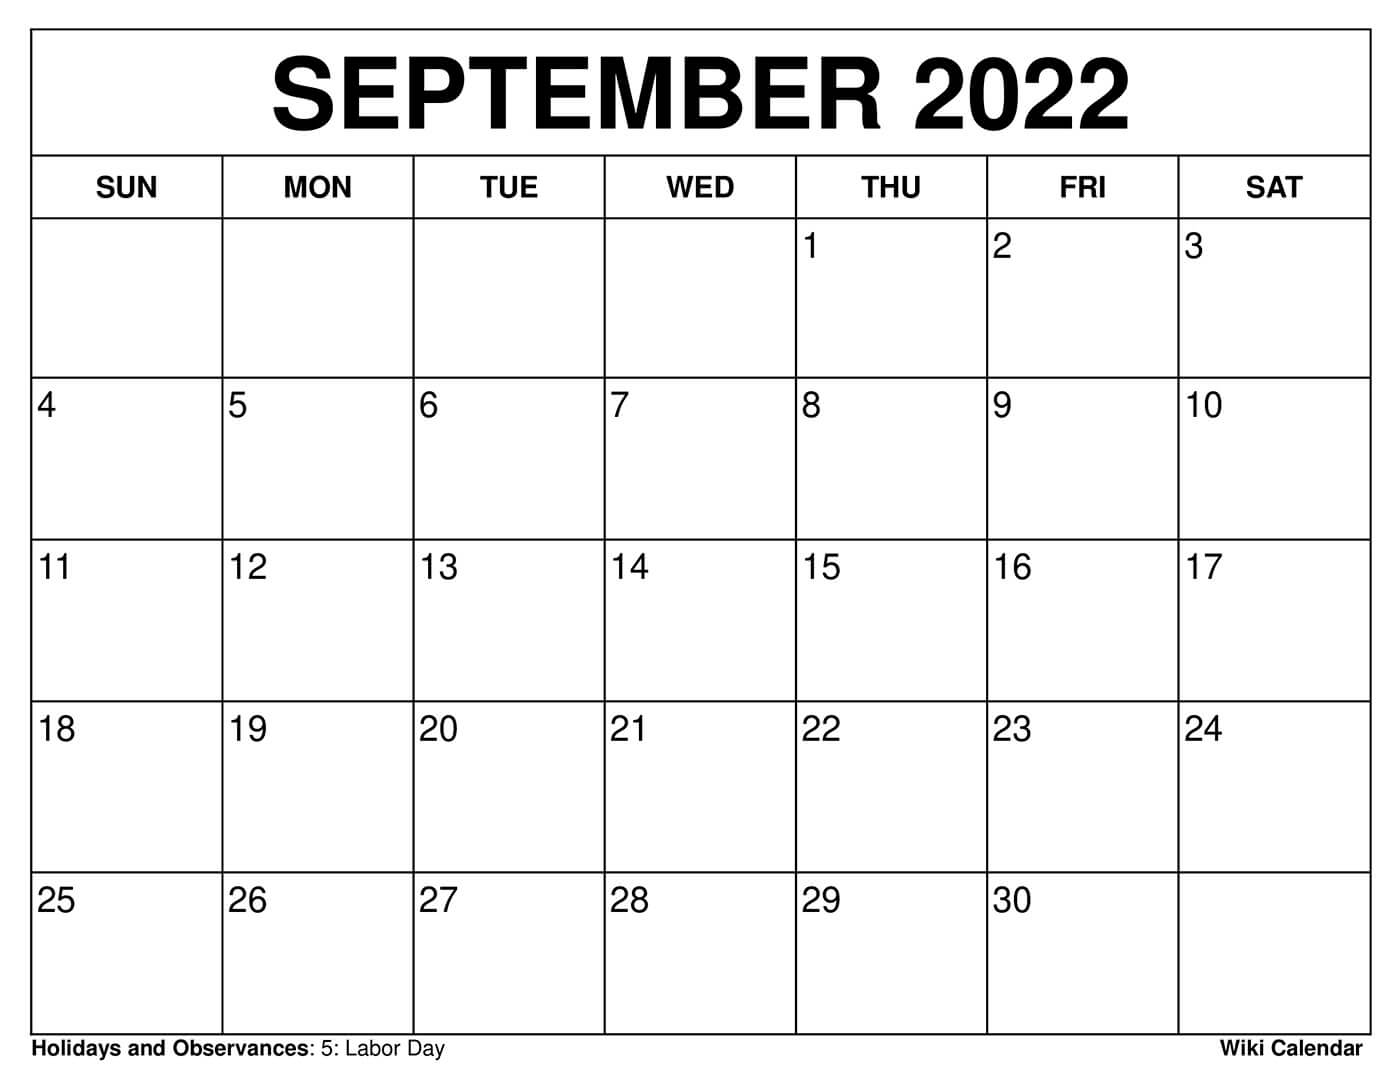 Free Printable Calendar Sept 2022 Free Printable September 2022 Calendars - Wiki Calendar